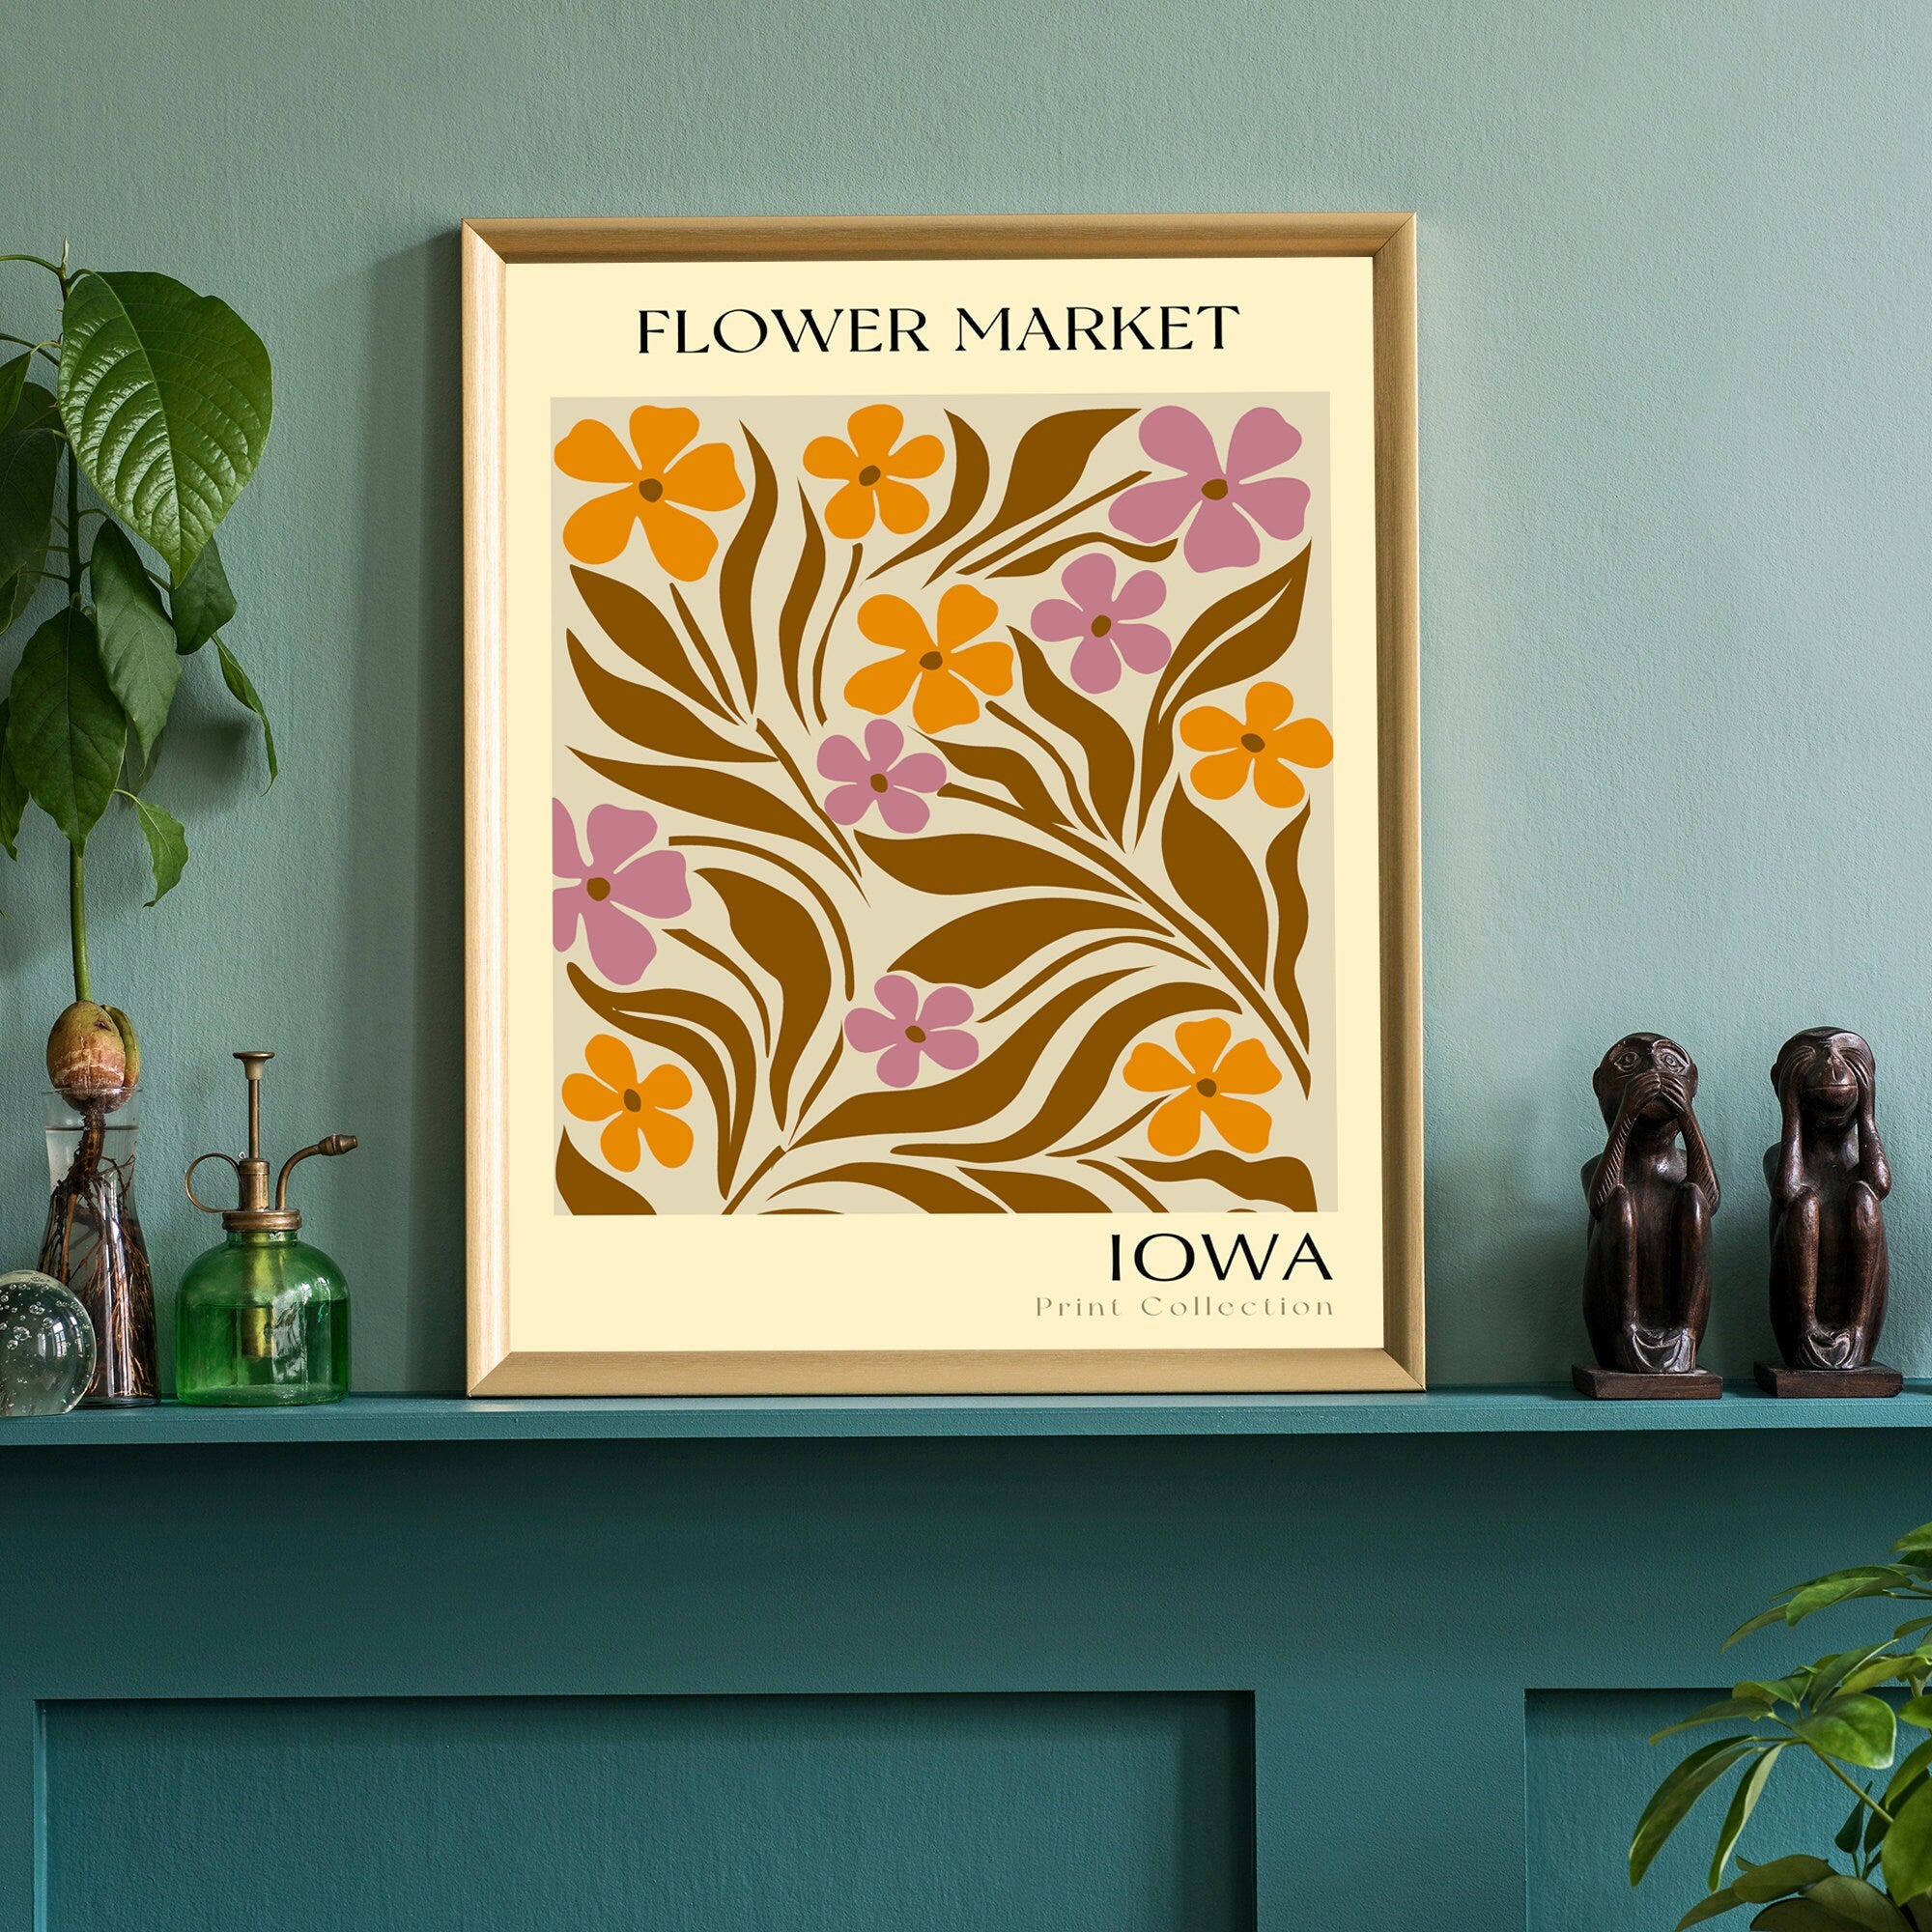 Iowa State flower print, USA states poster, Iowa flower market poster, Botanical posters, Nature poster artwork, Boho floral wall art